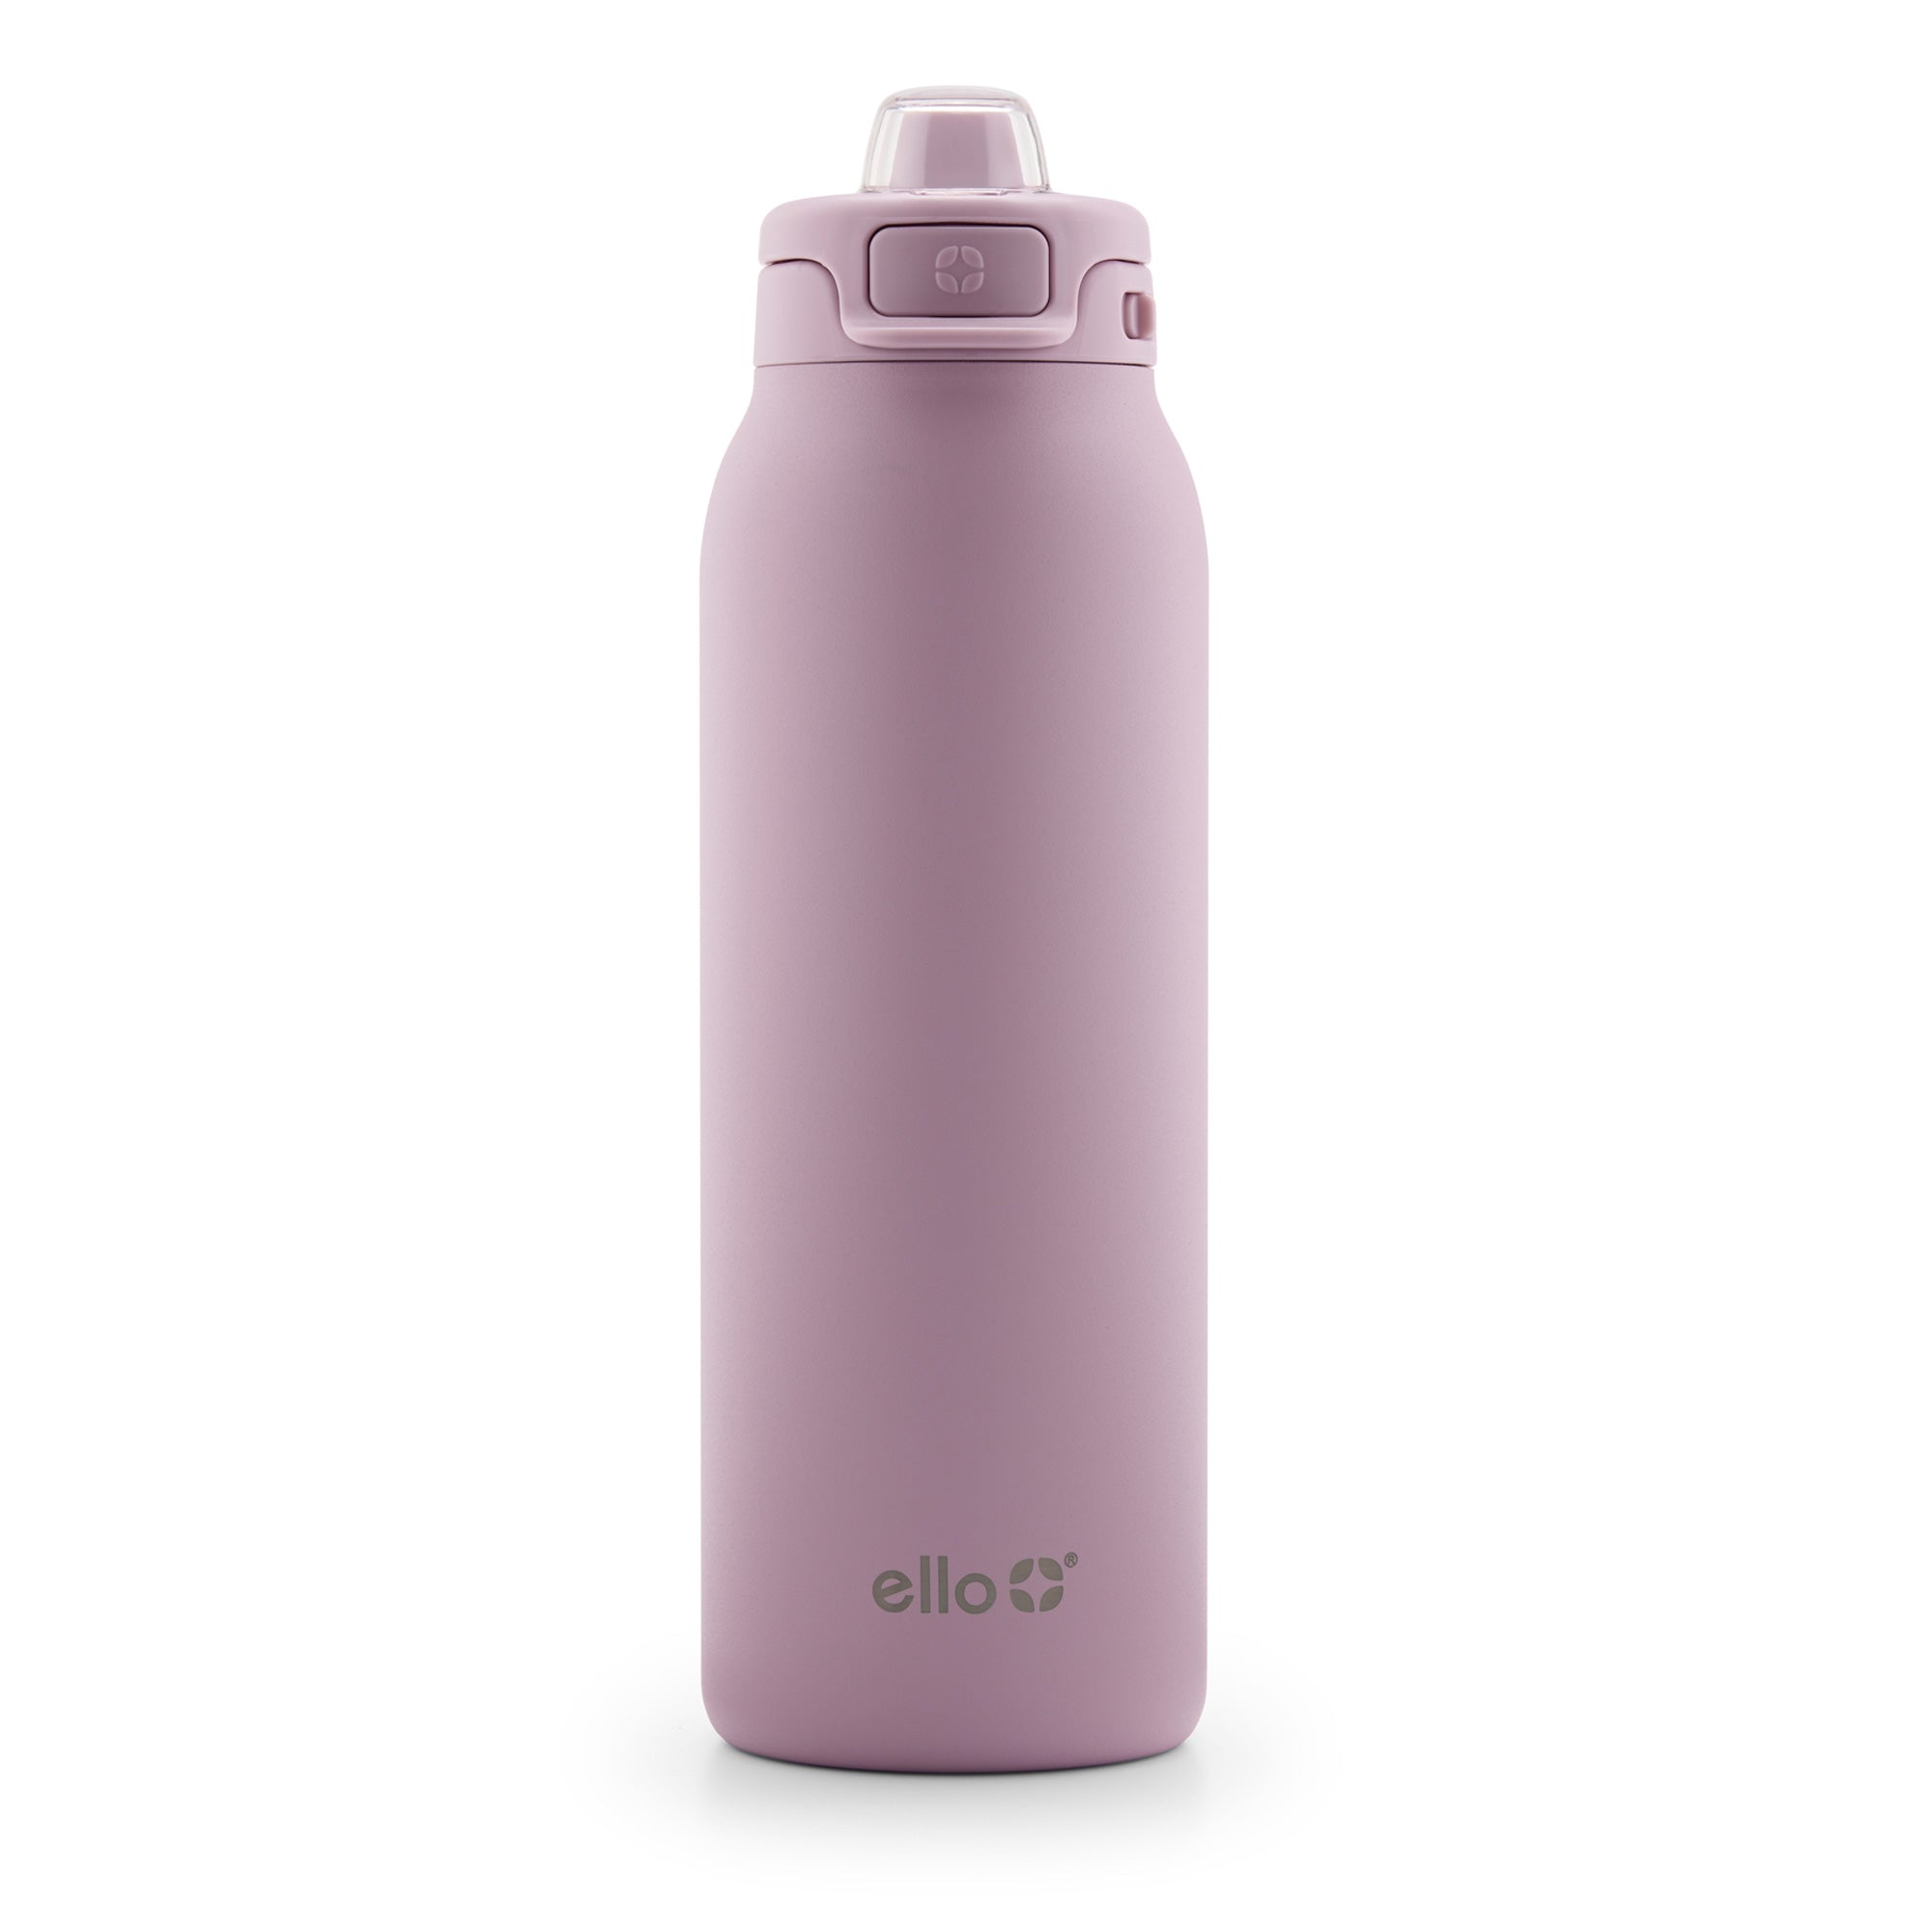 Ello Cooper 22oz Stainless Steel Water Bottle